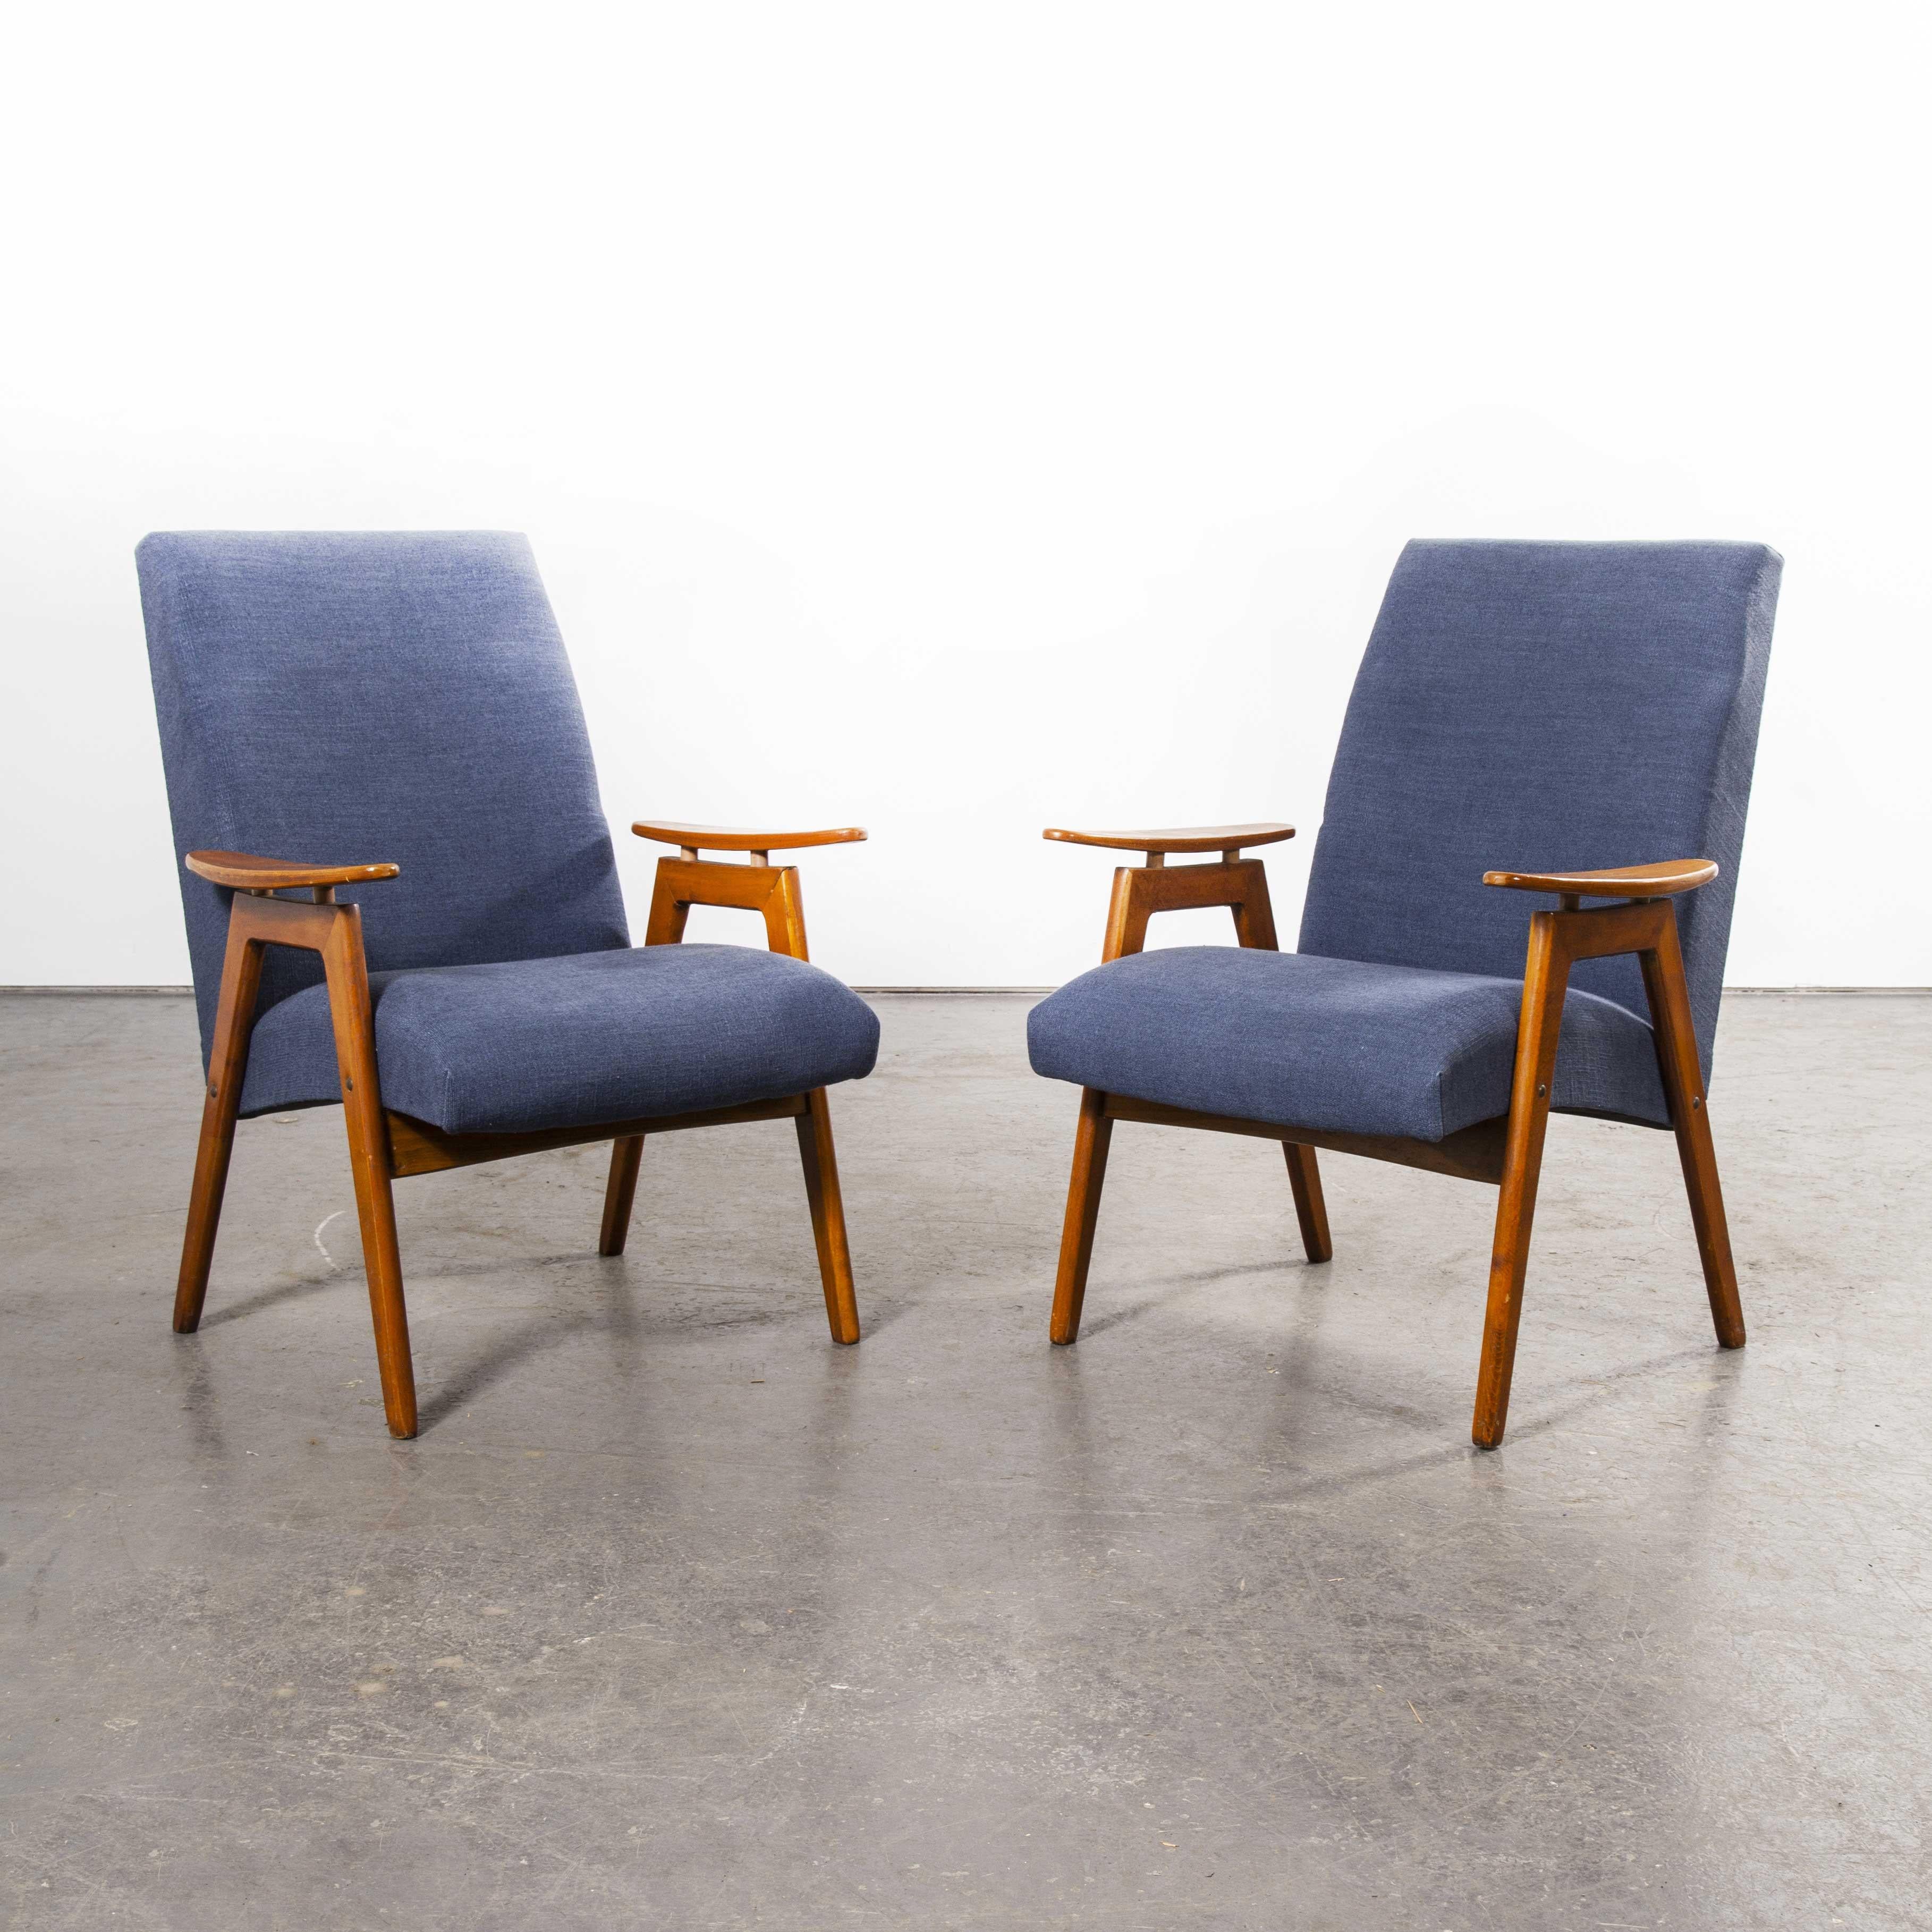 Scandinavian 1950s Midcentury Pair of Armchairs, Blue Cotton Linen Upholstery